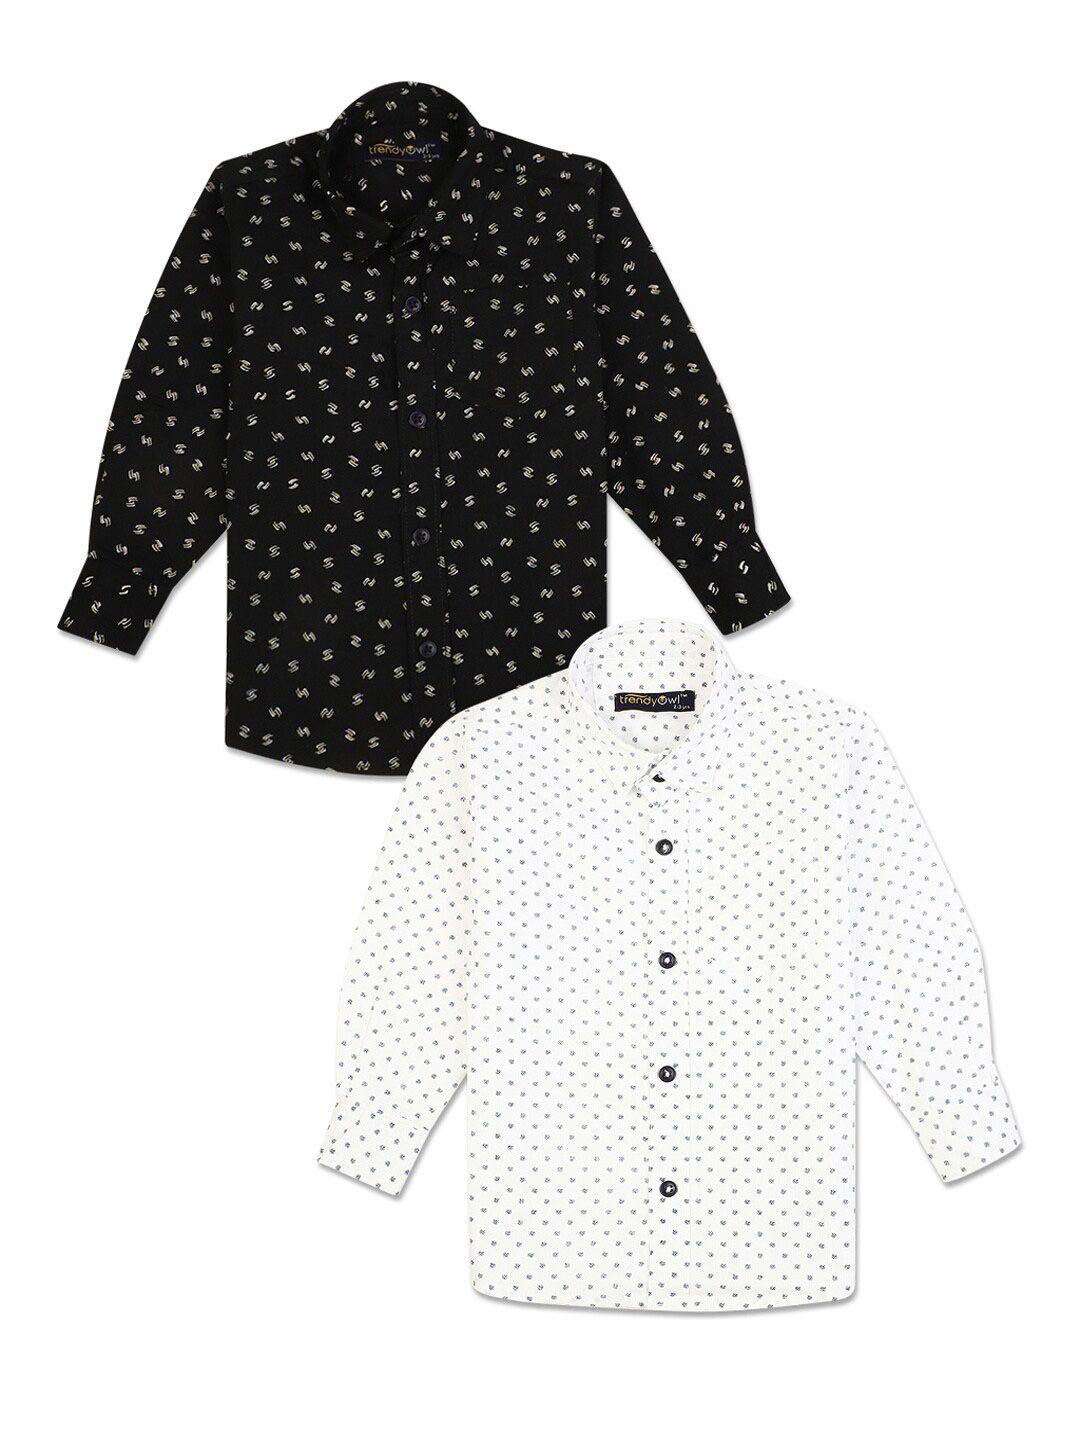 v-mart pack of 2 boys black & white standard printed cotton casual shirt